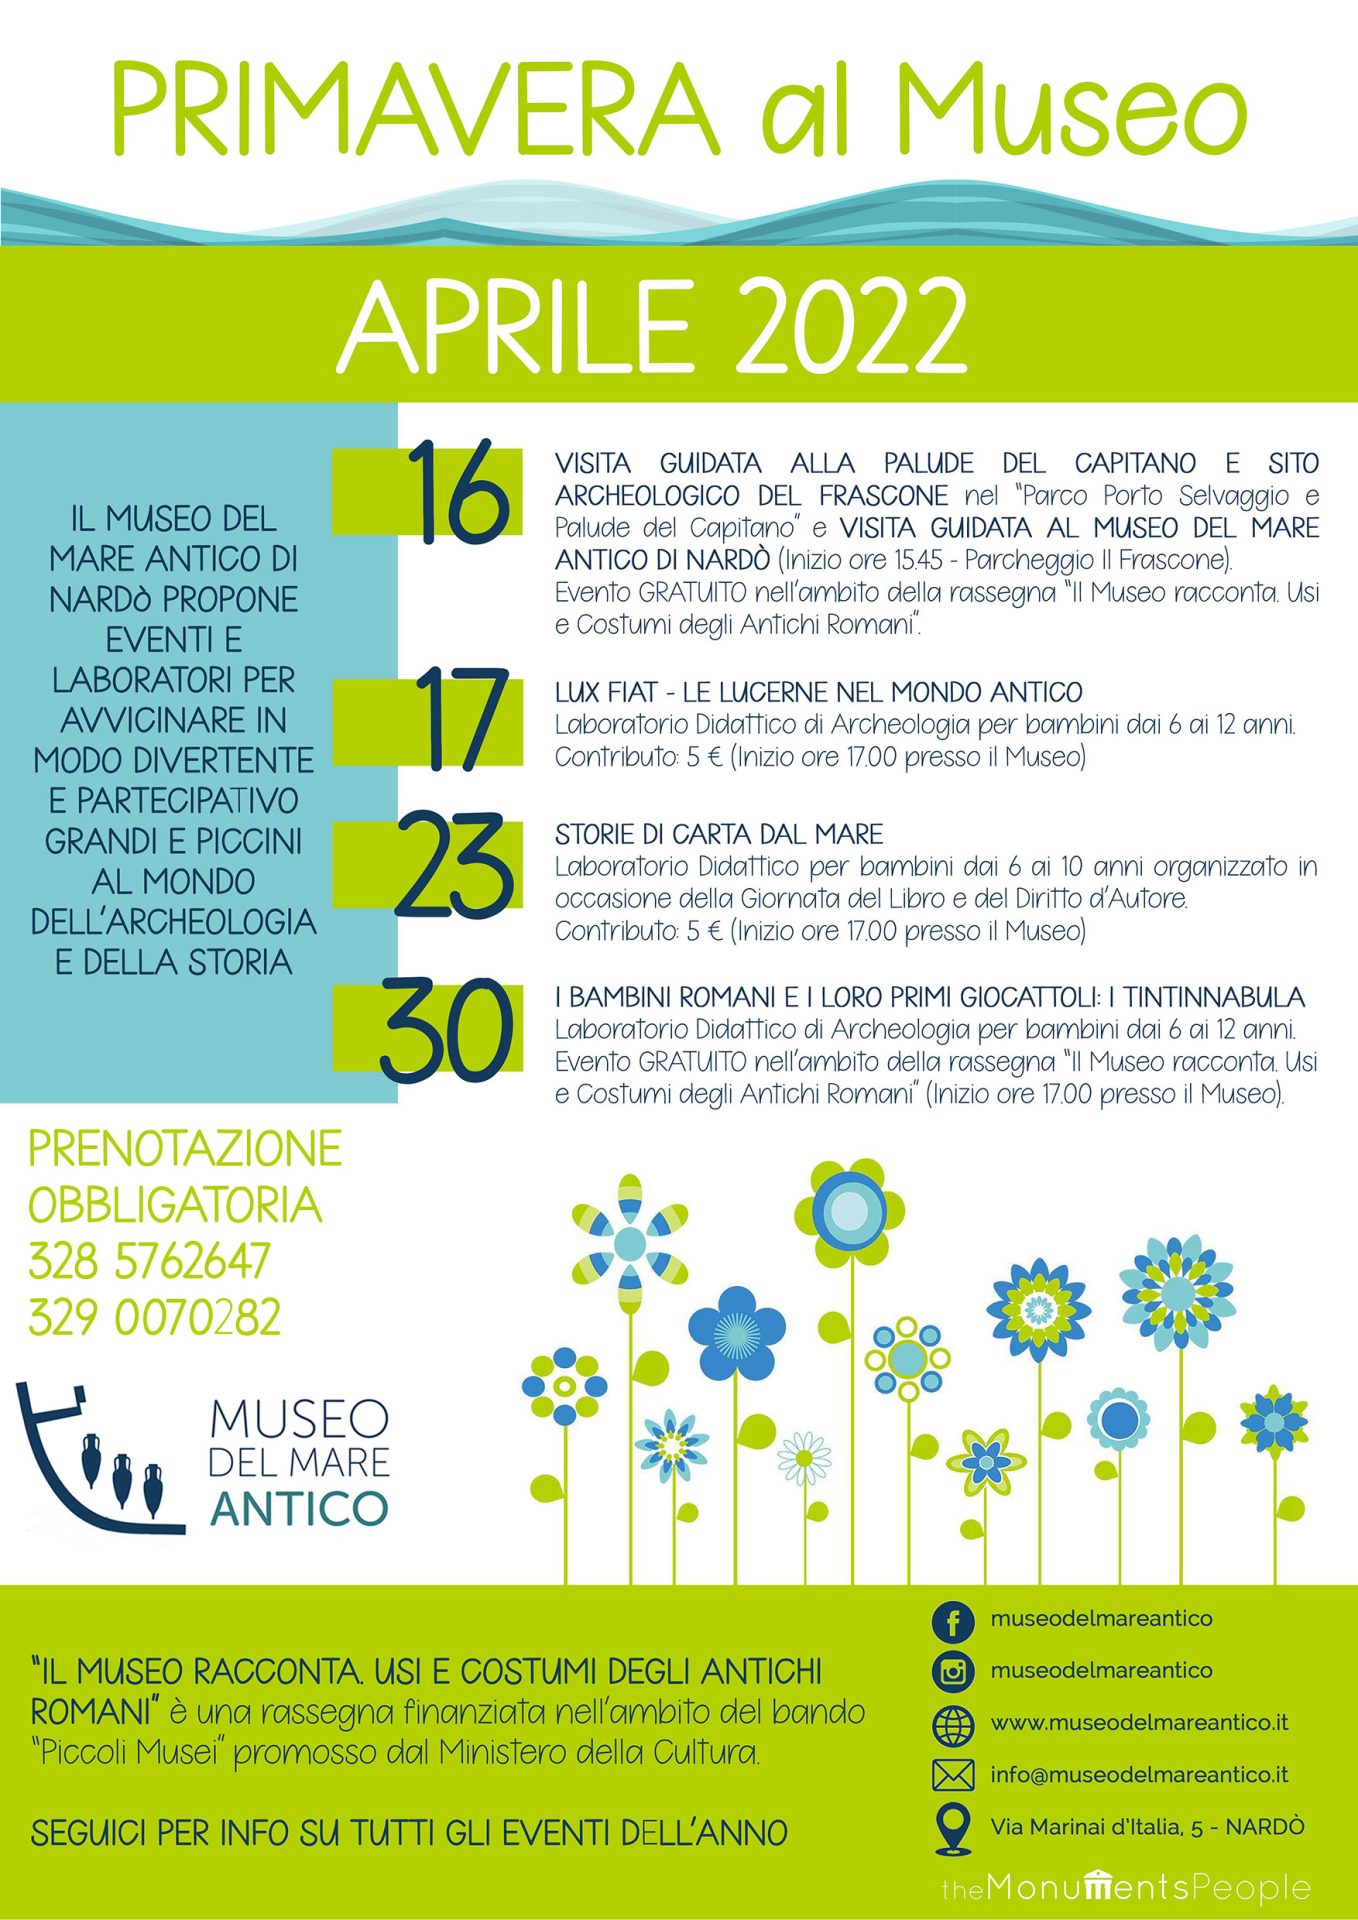 Primavera al Museo- Aprile 2022